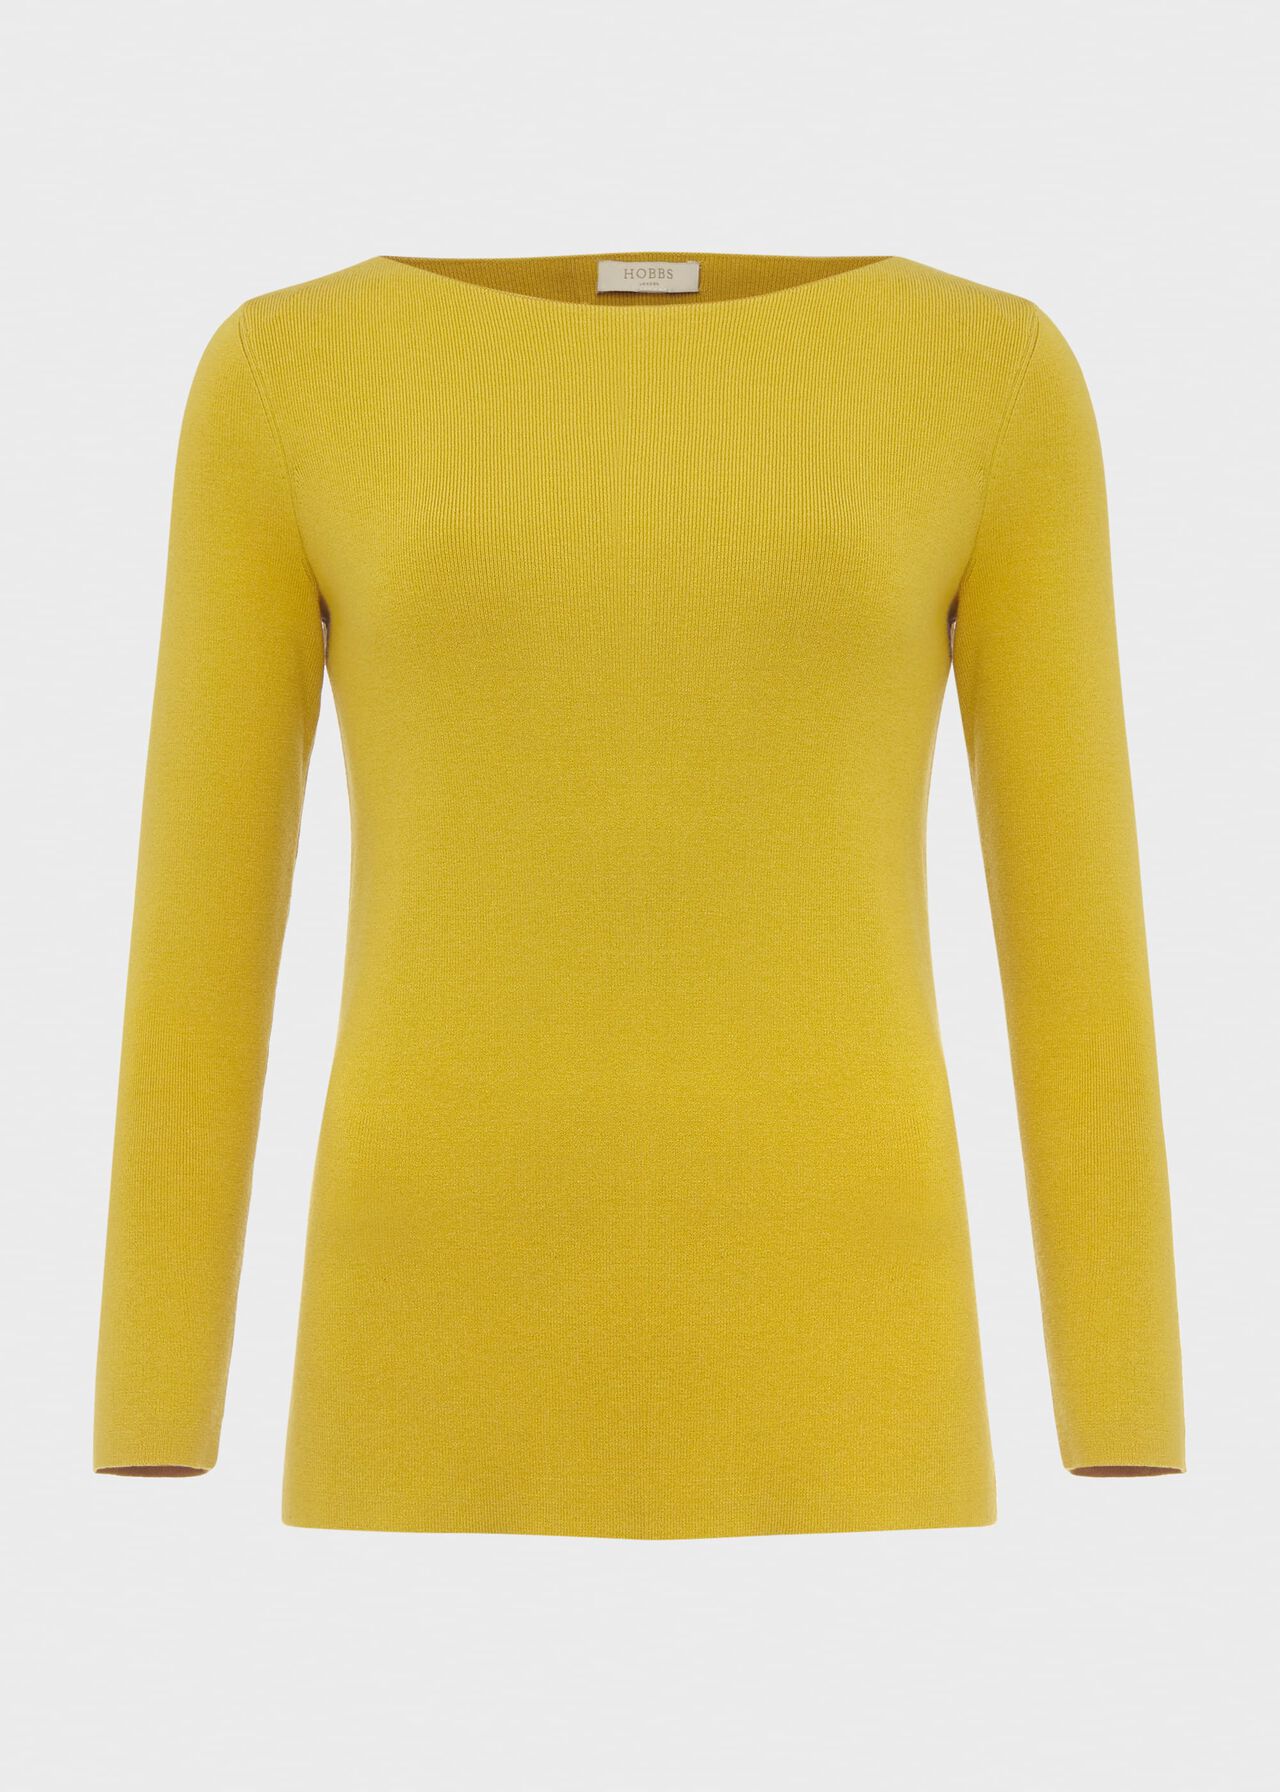 Cesci Sweater, Lemon Yellow, hi-res